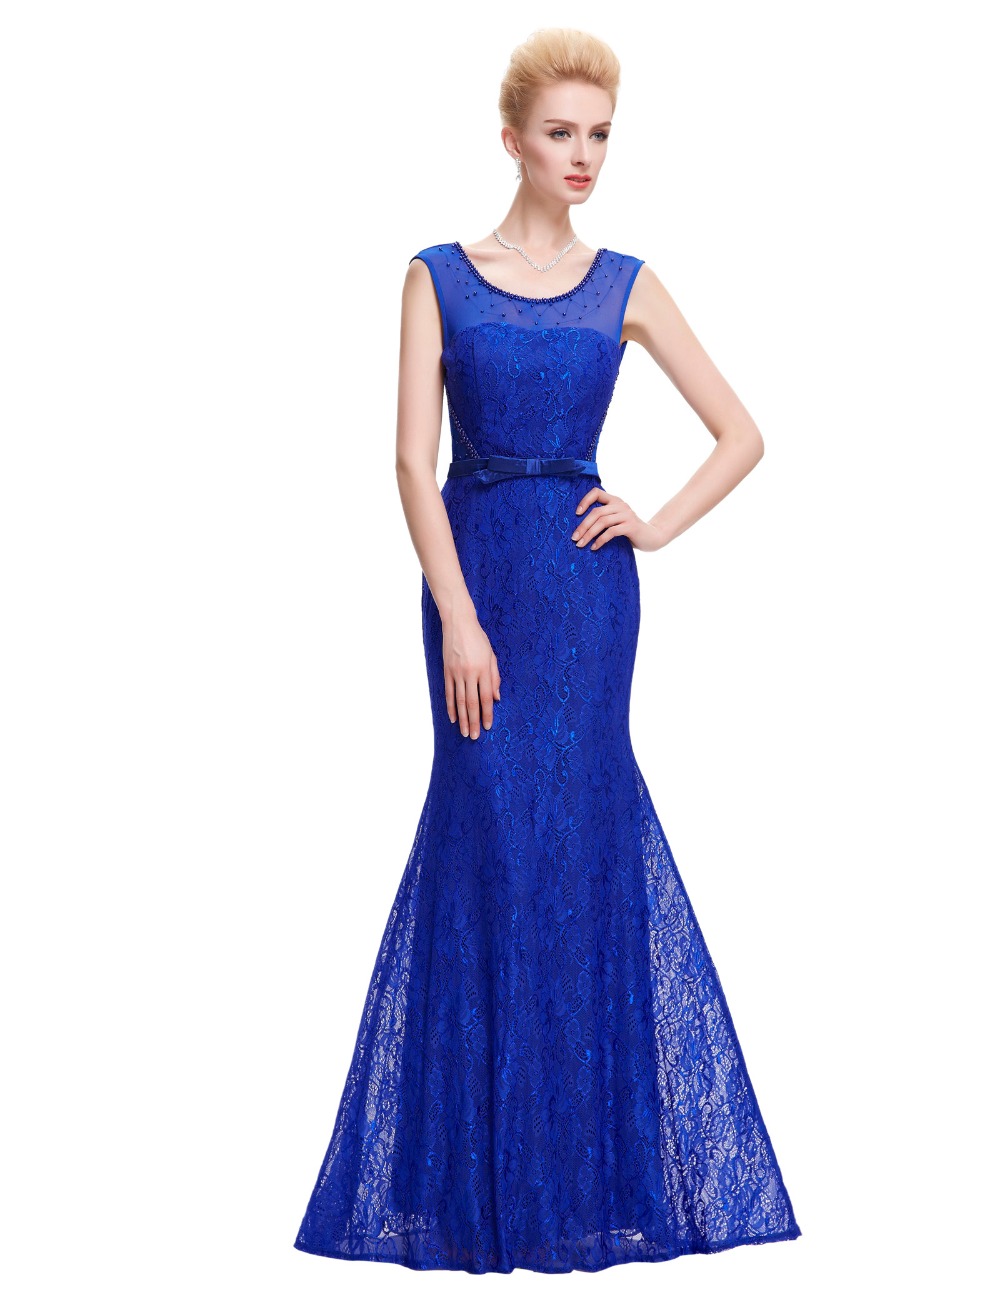 Free Shipping Cheap China Clothing Starzz Beautiful Lace Evening Dresses Black Blue Pink ...